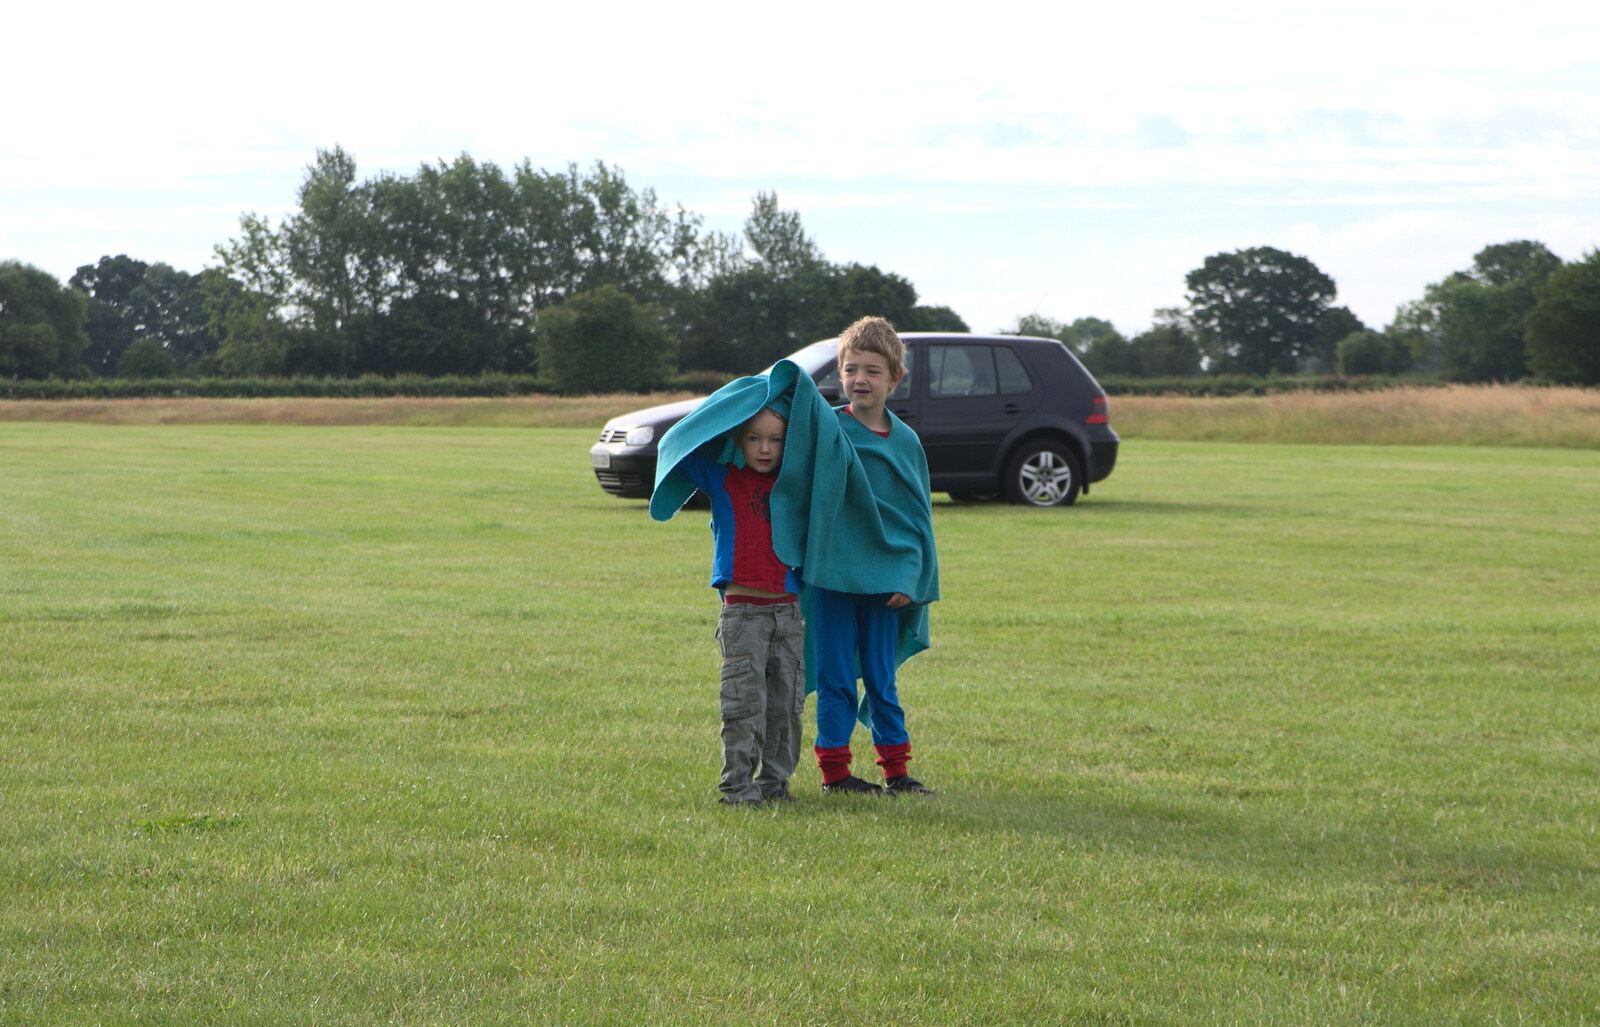 The boys under a blanket from "Our Little Friends" Warbirds Hangar Dance, Hardwick, Norfolk - 9th July 2016